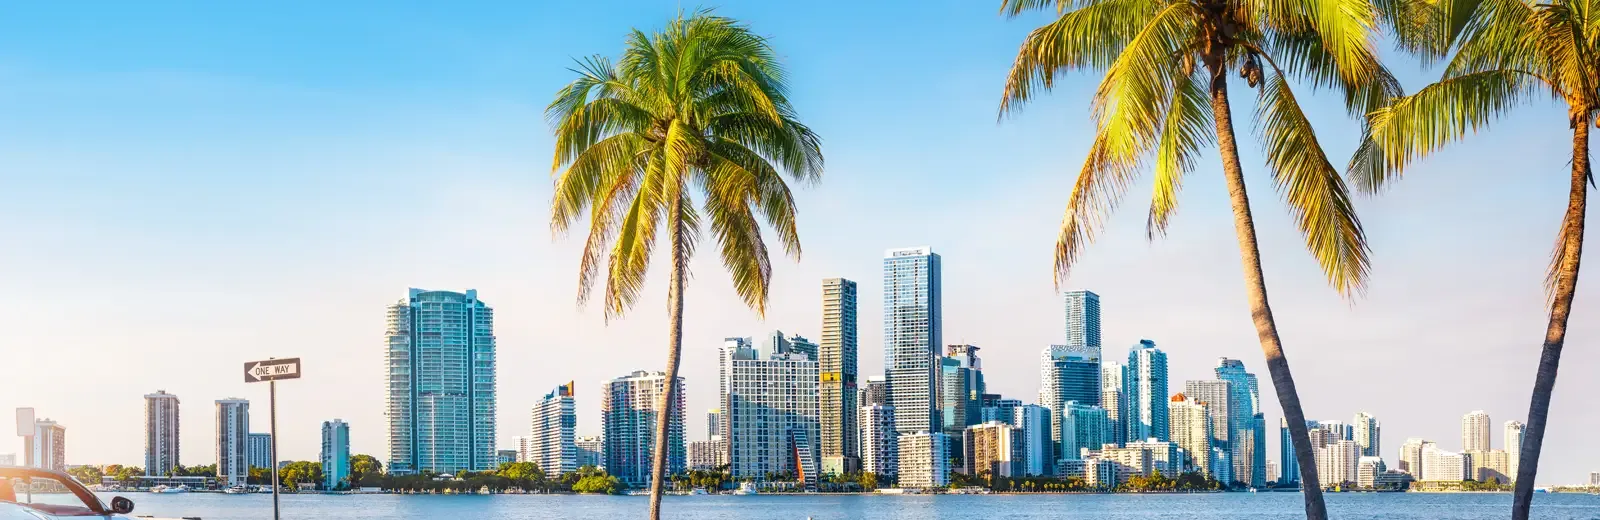 Miami Florida Skyline - Pest Control in Southern Florida